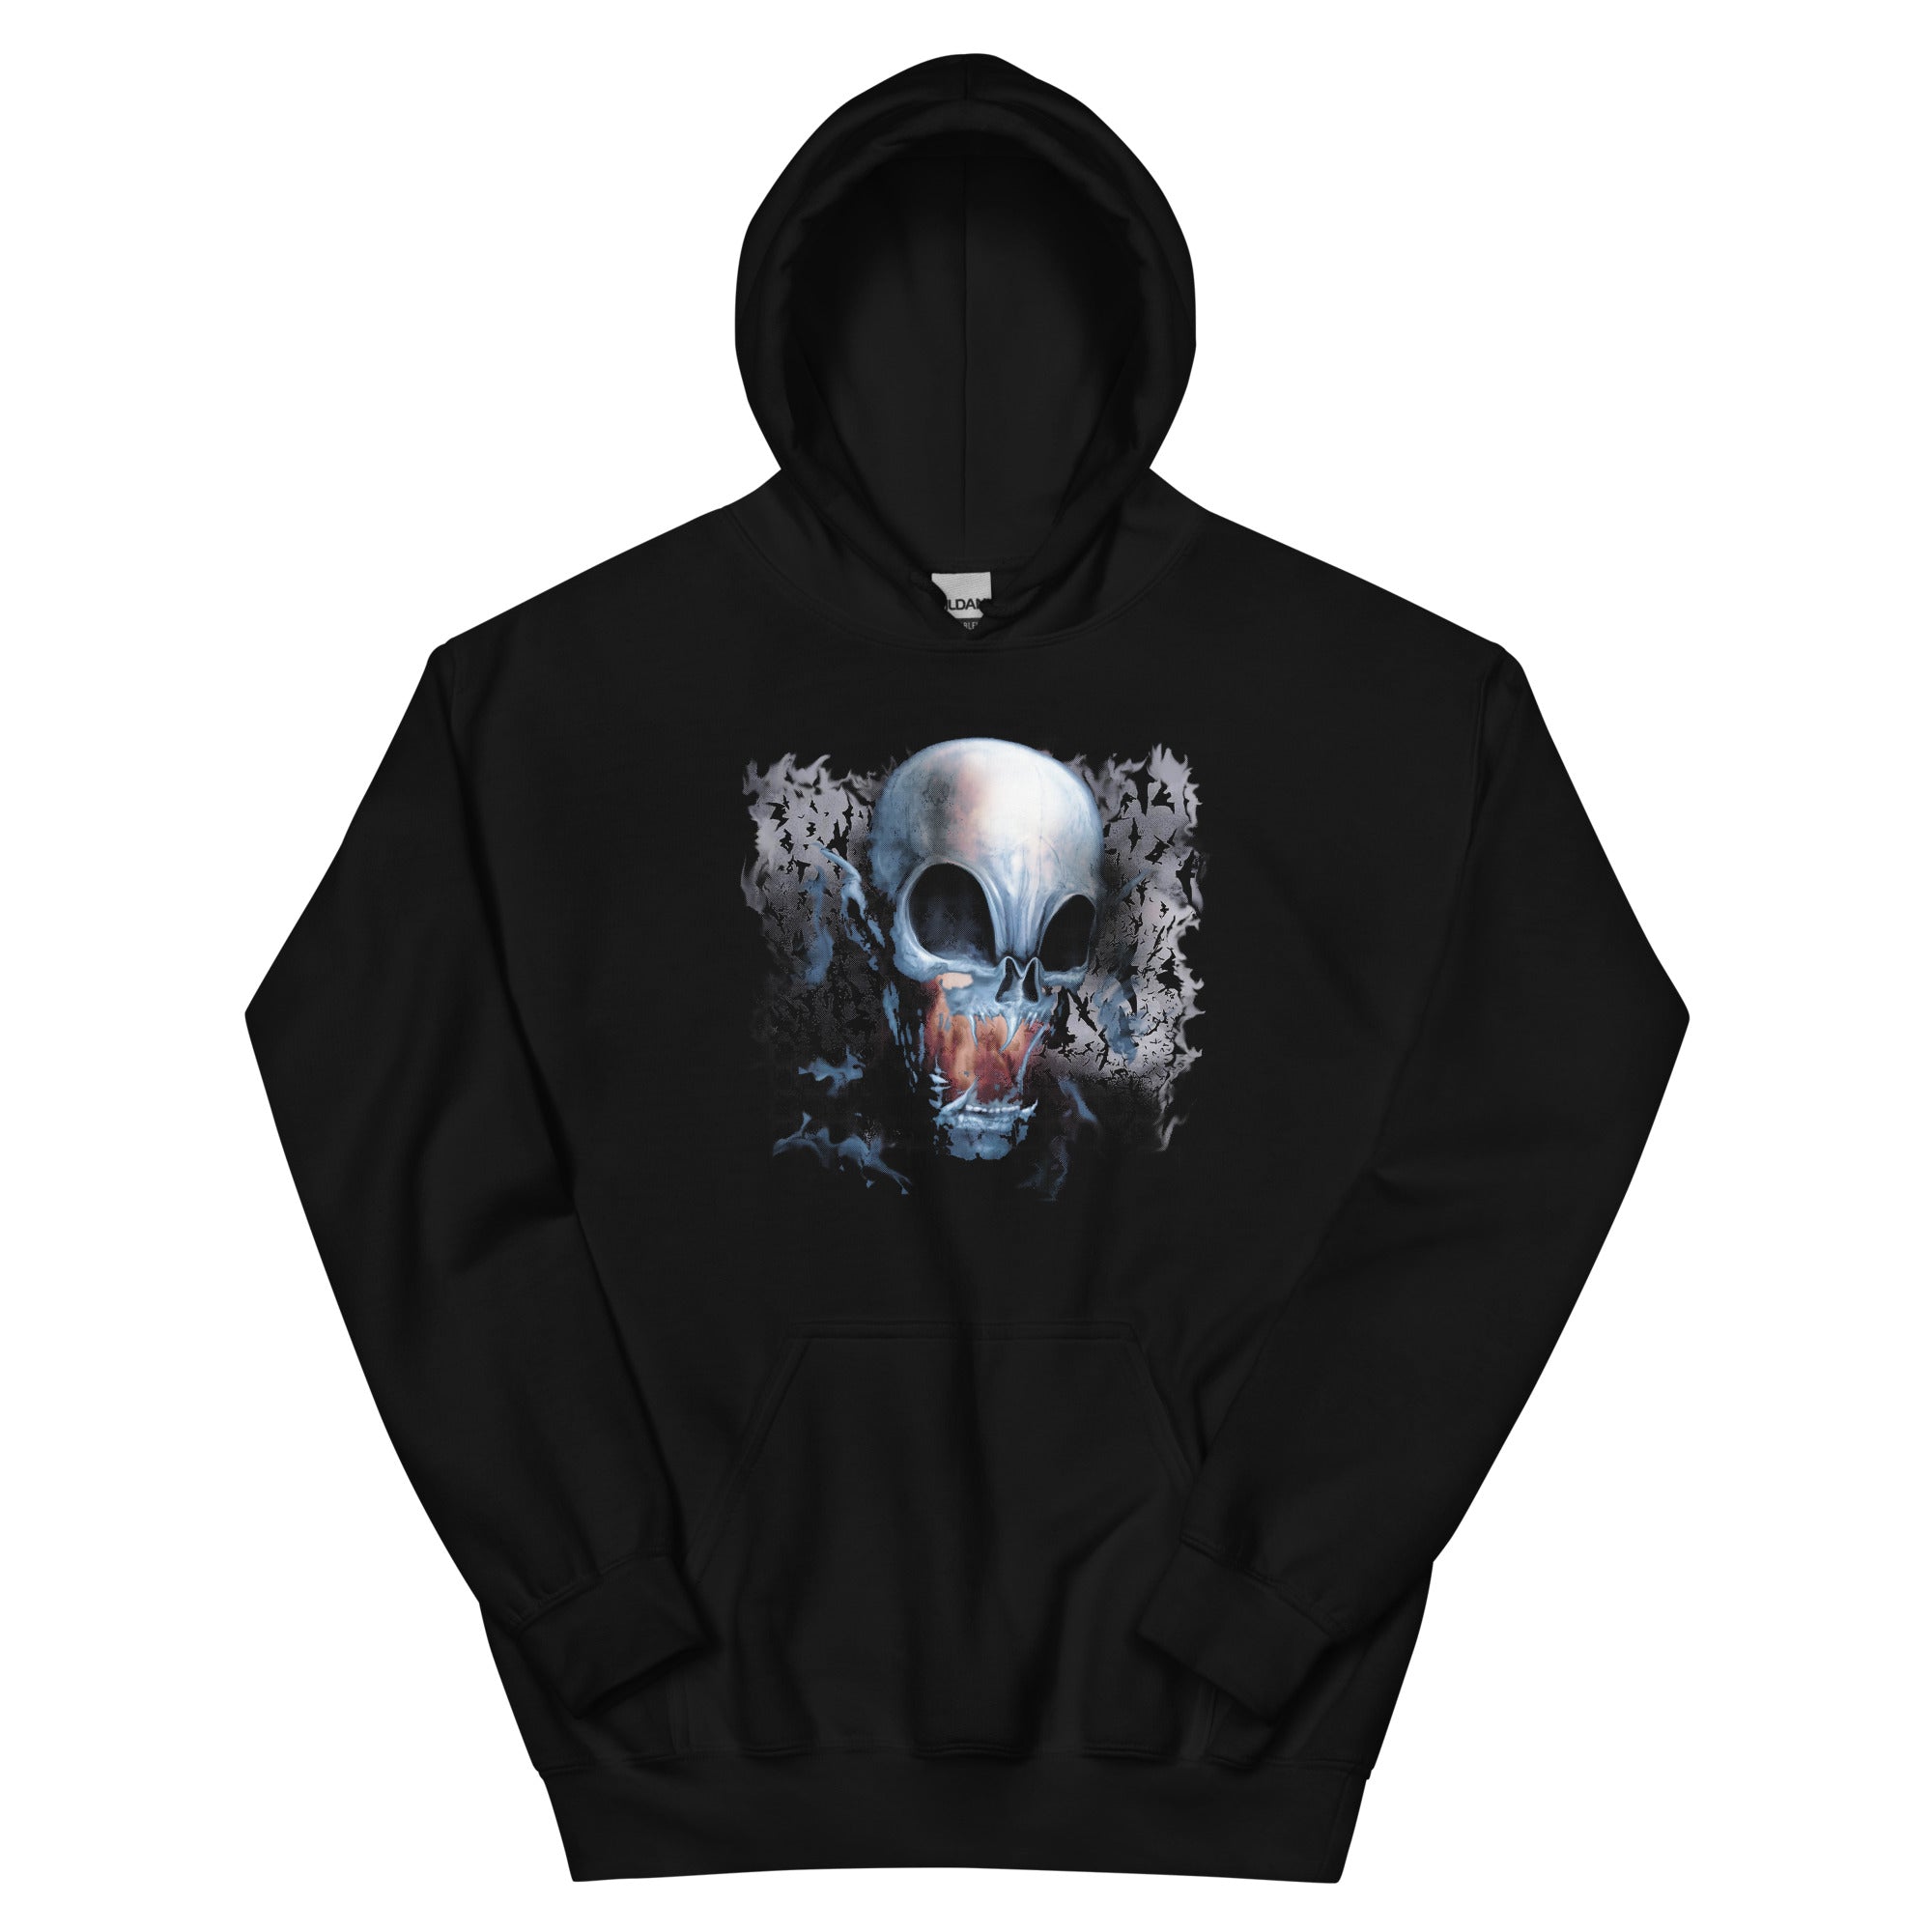 Vampire Demon Skull Melting with Bats Unisex Hoodie Sweatshirt - Edge of Life Designs